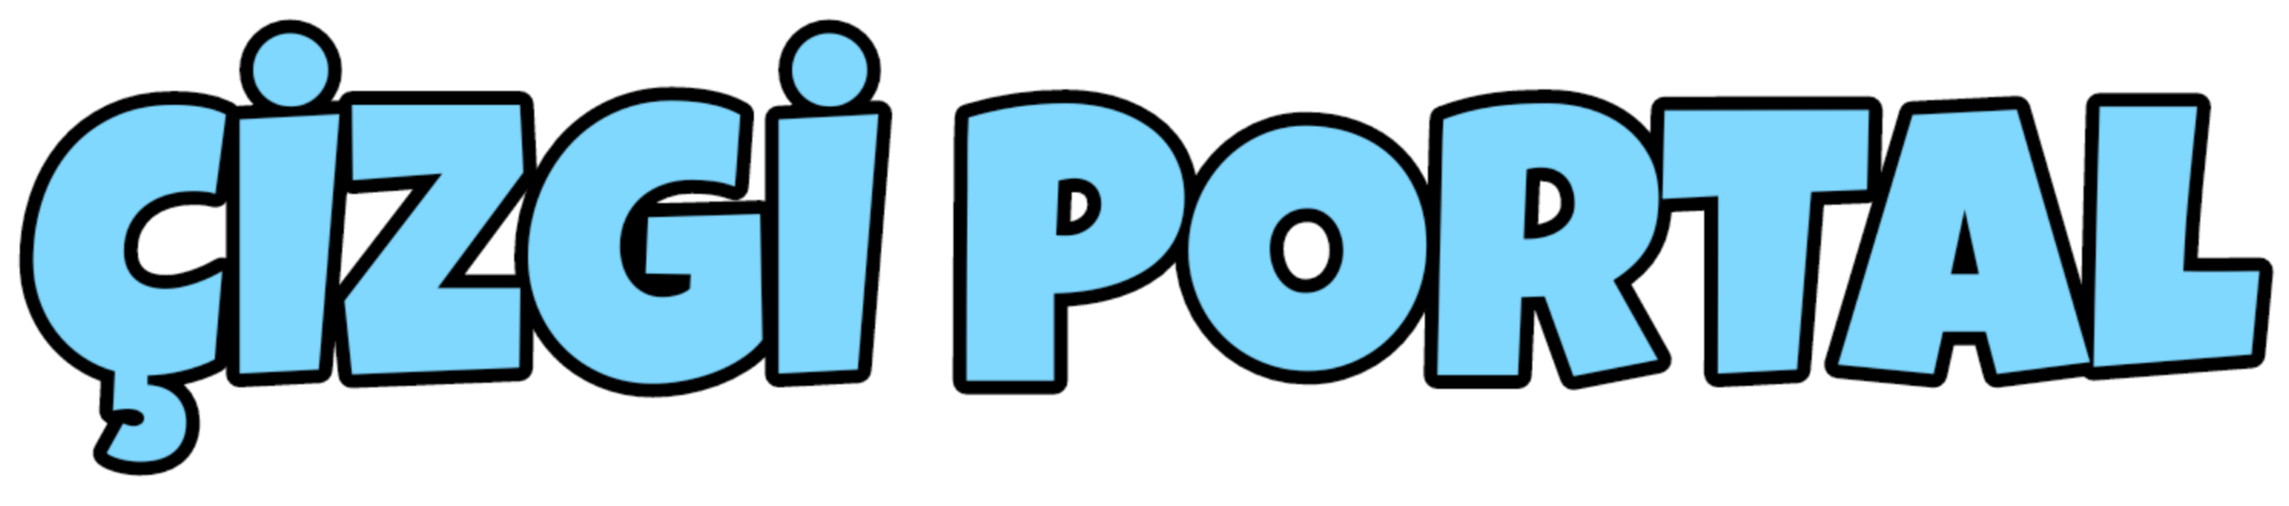 Çizgi Portal 2